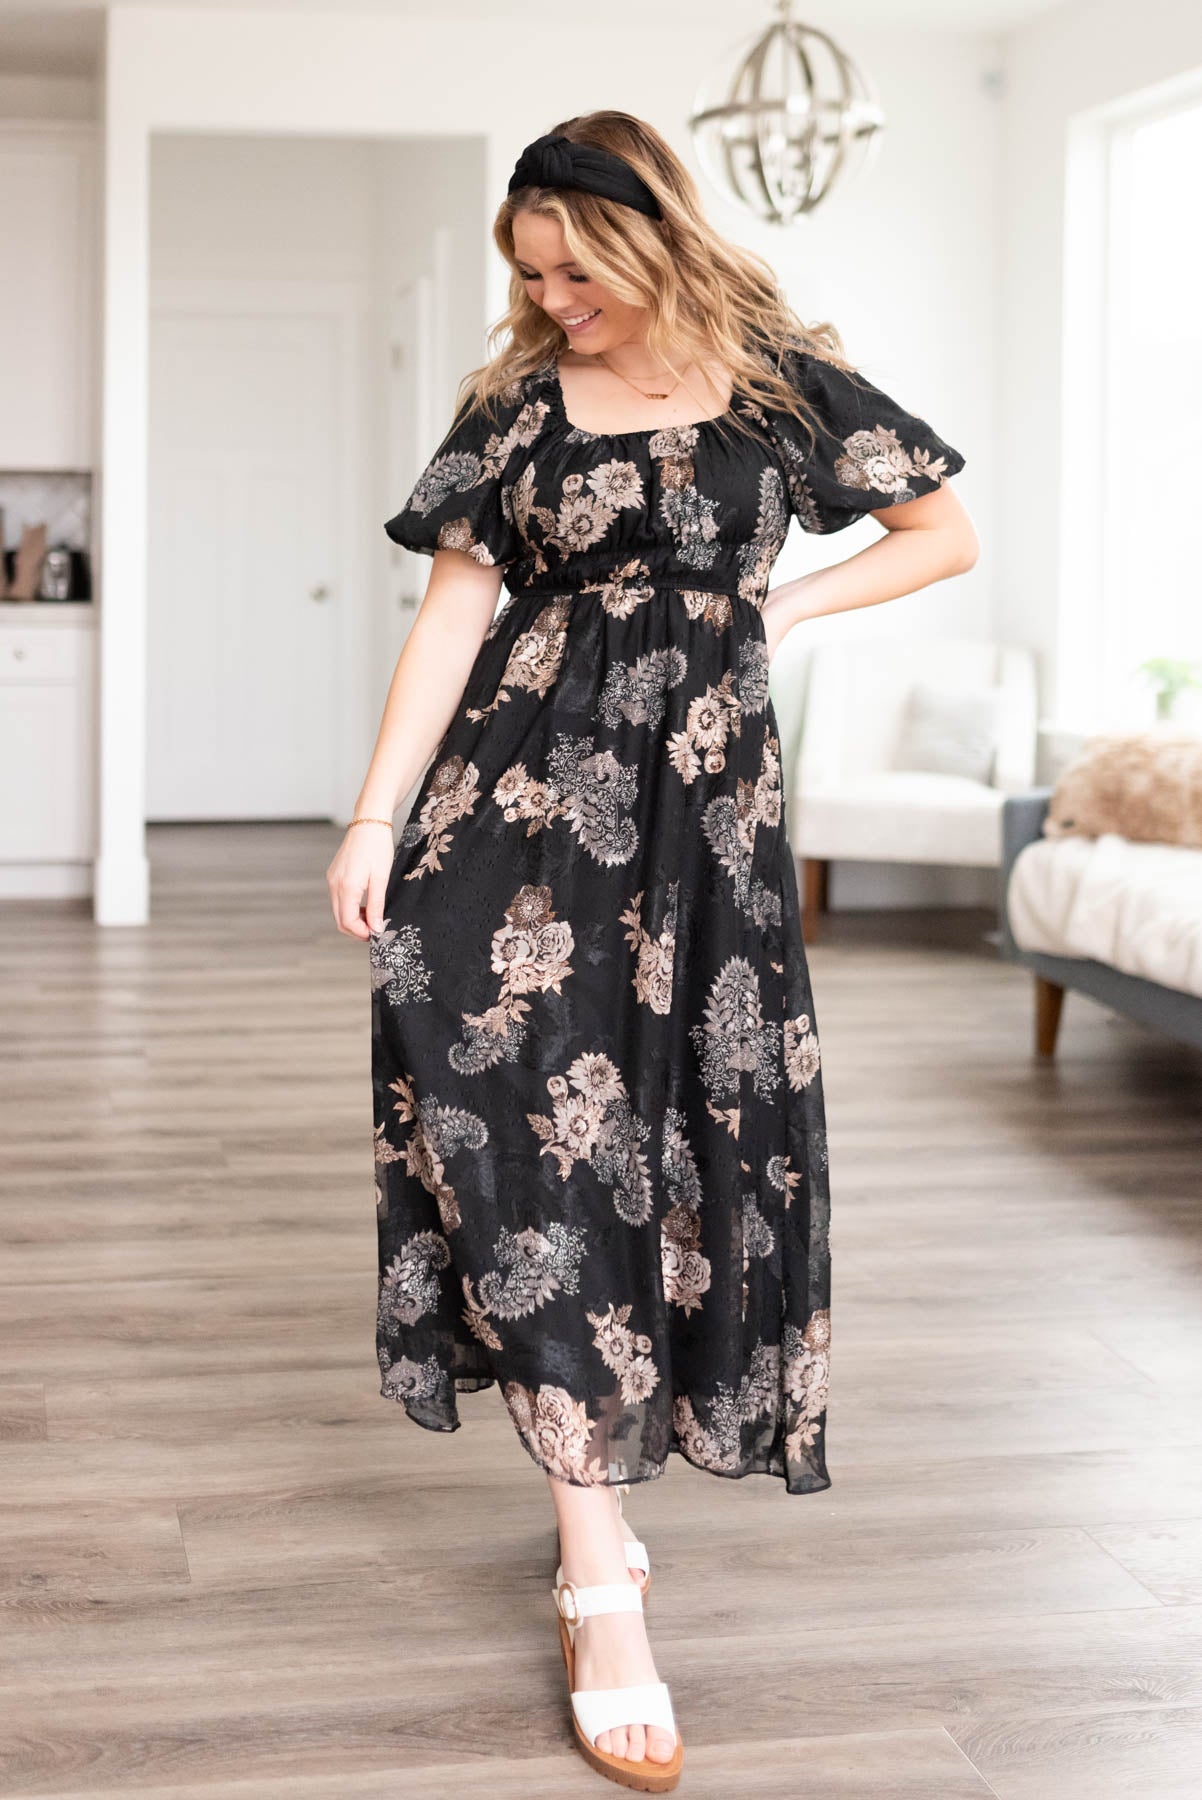 Short sleeve black pattern dress with blush flowers